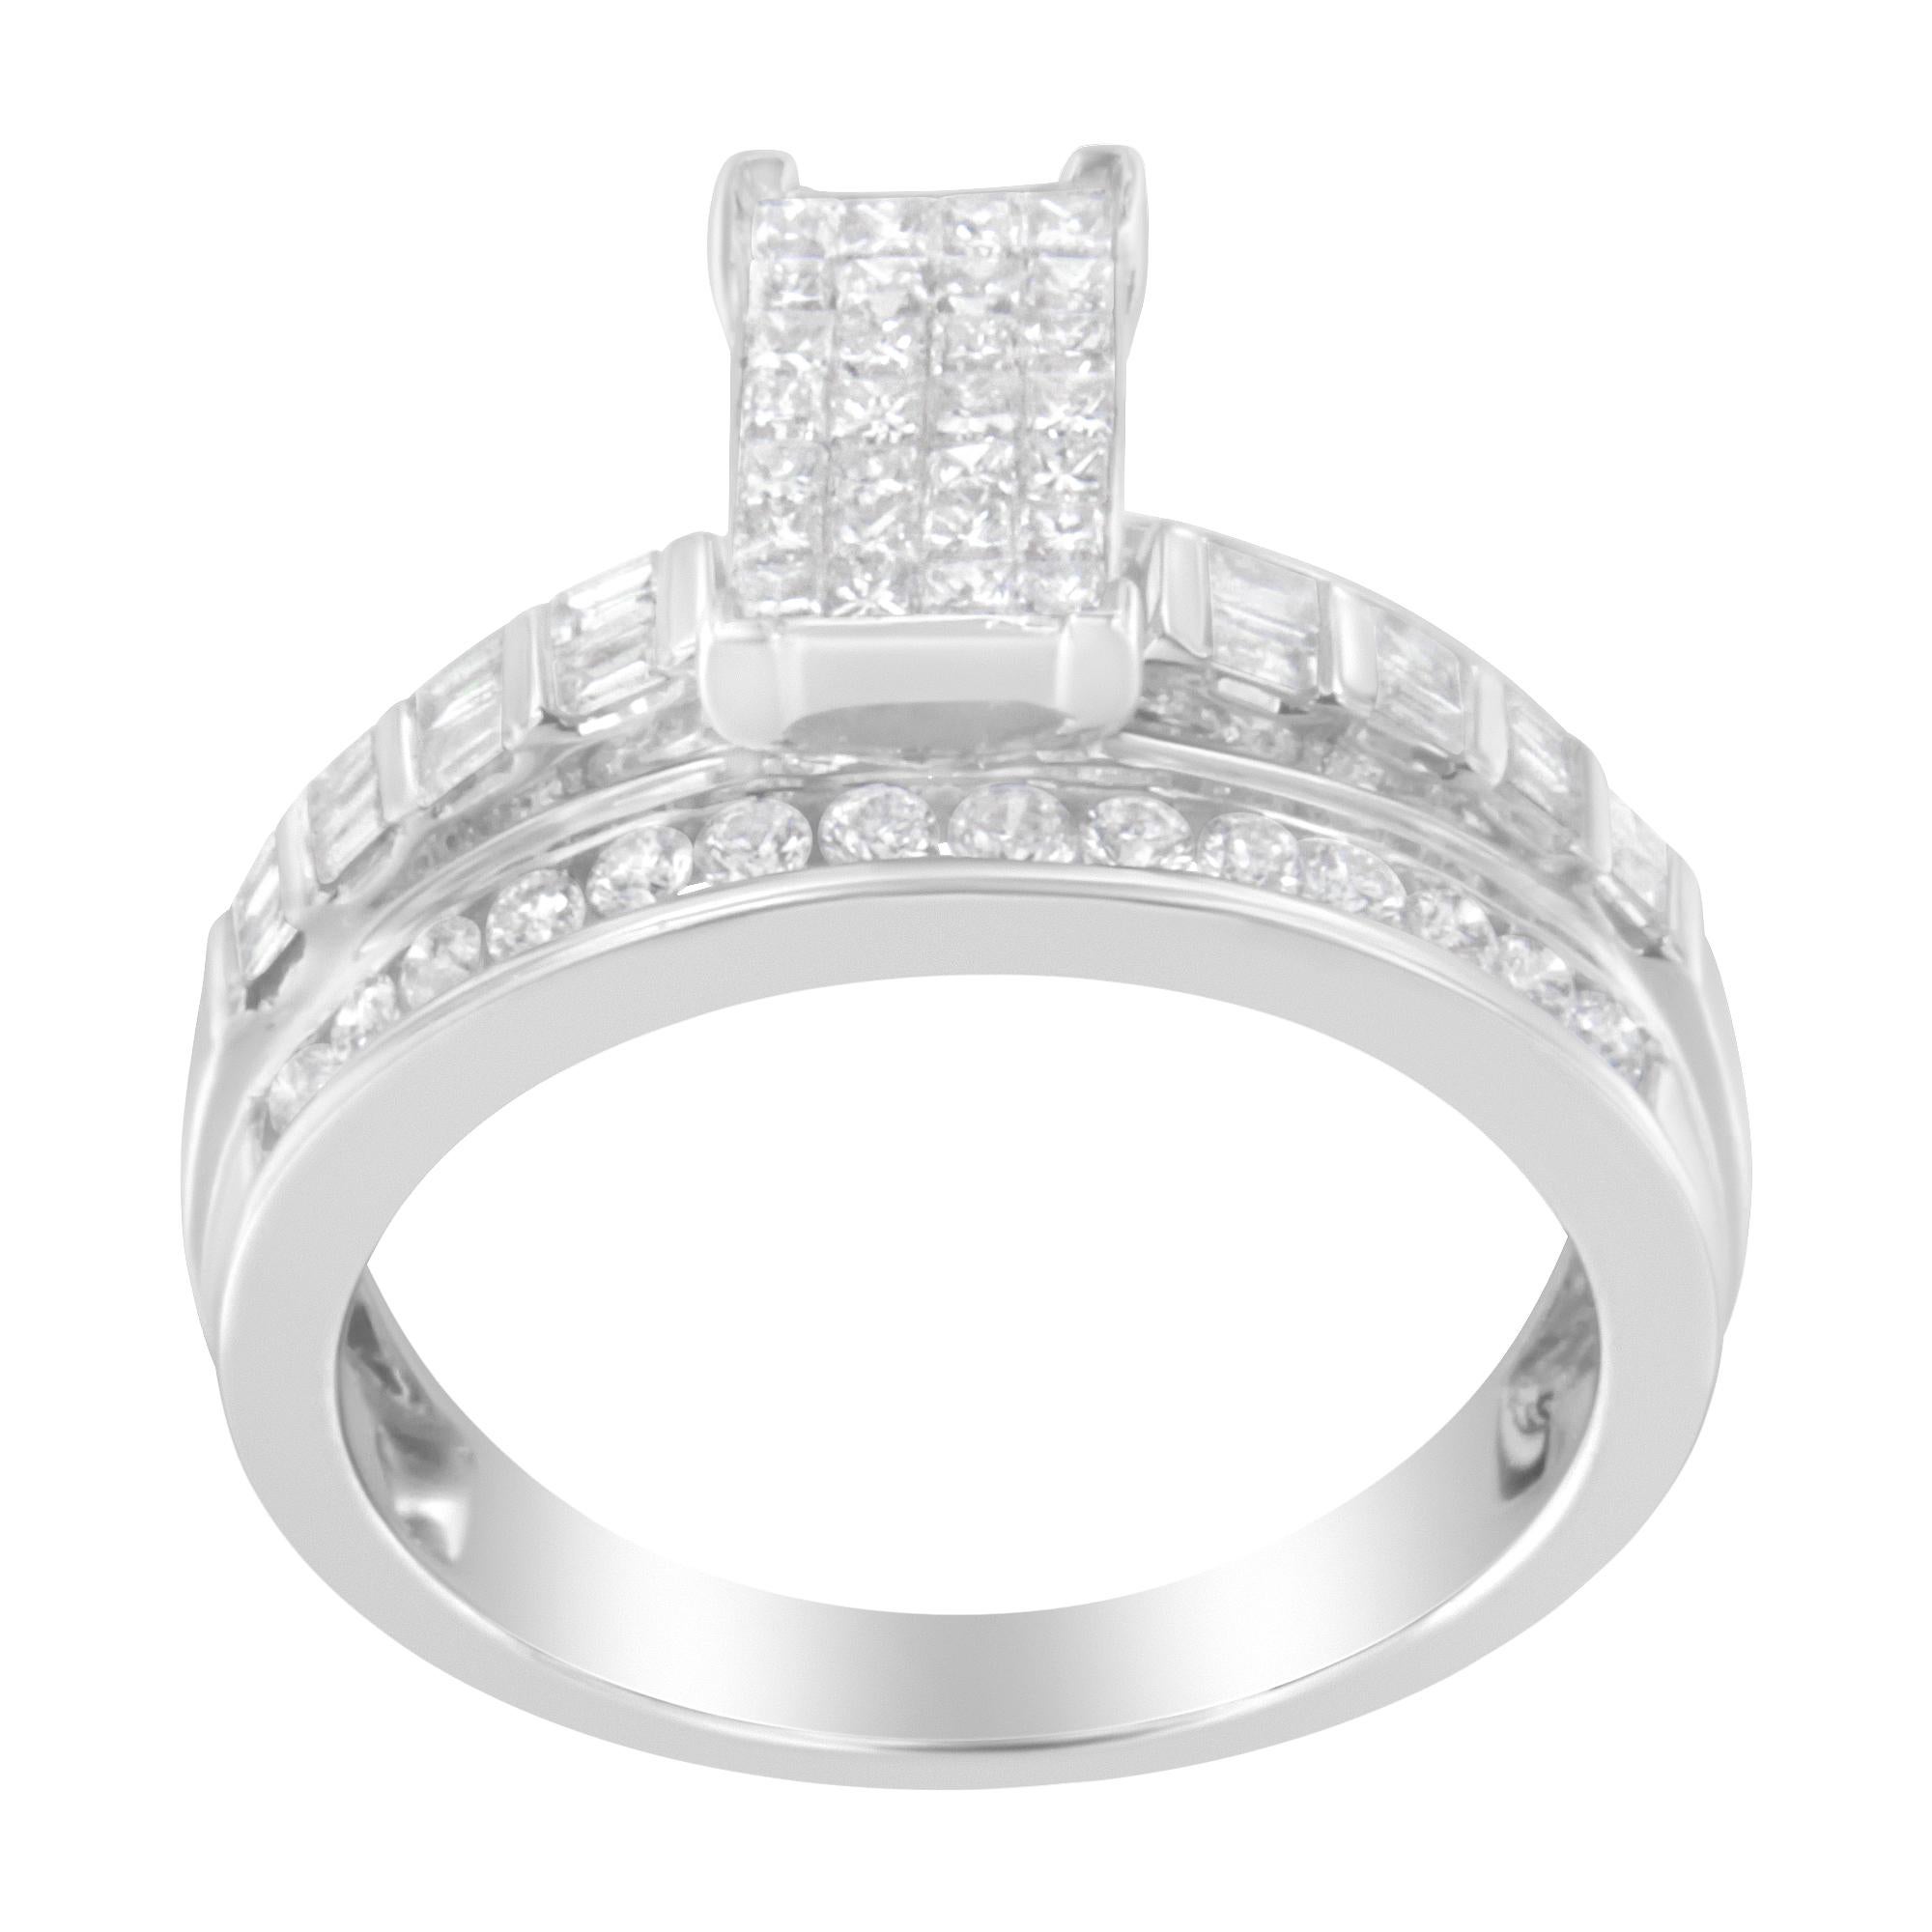 For Sale:  14k White Gold 1.00 Carat Diamond Composite Ring 2